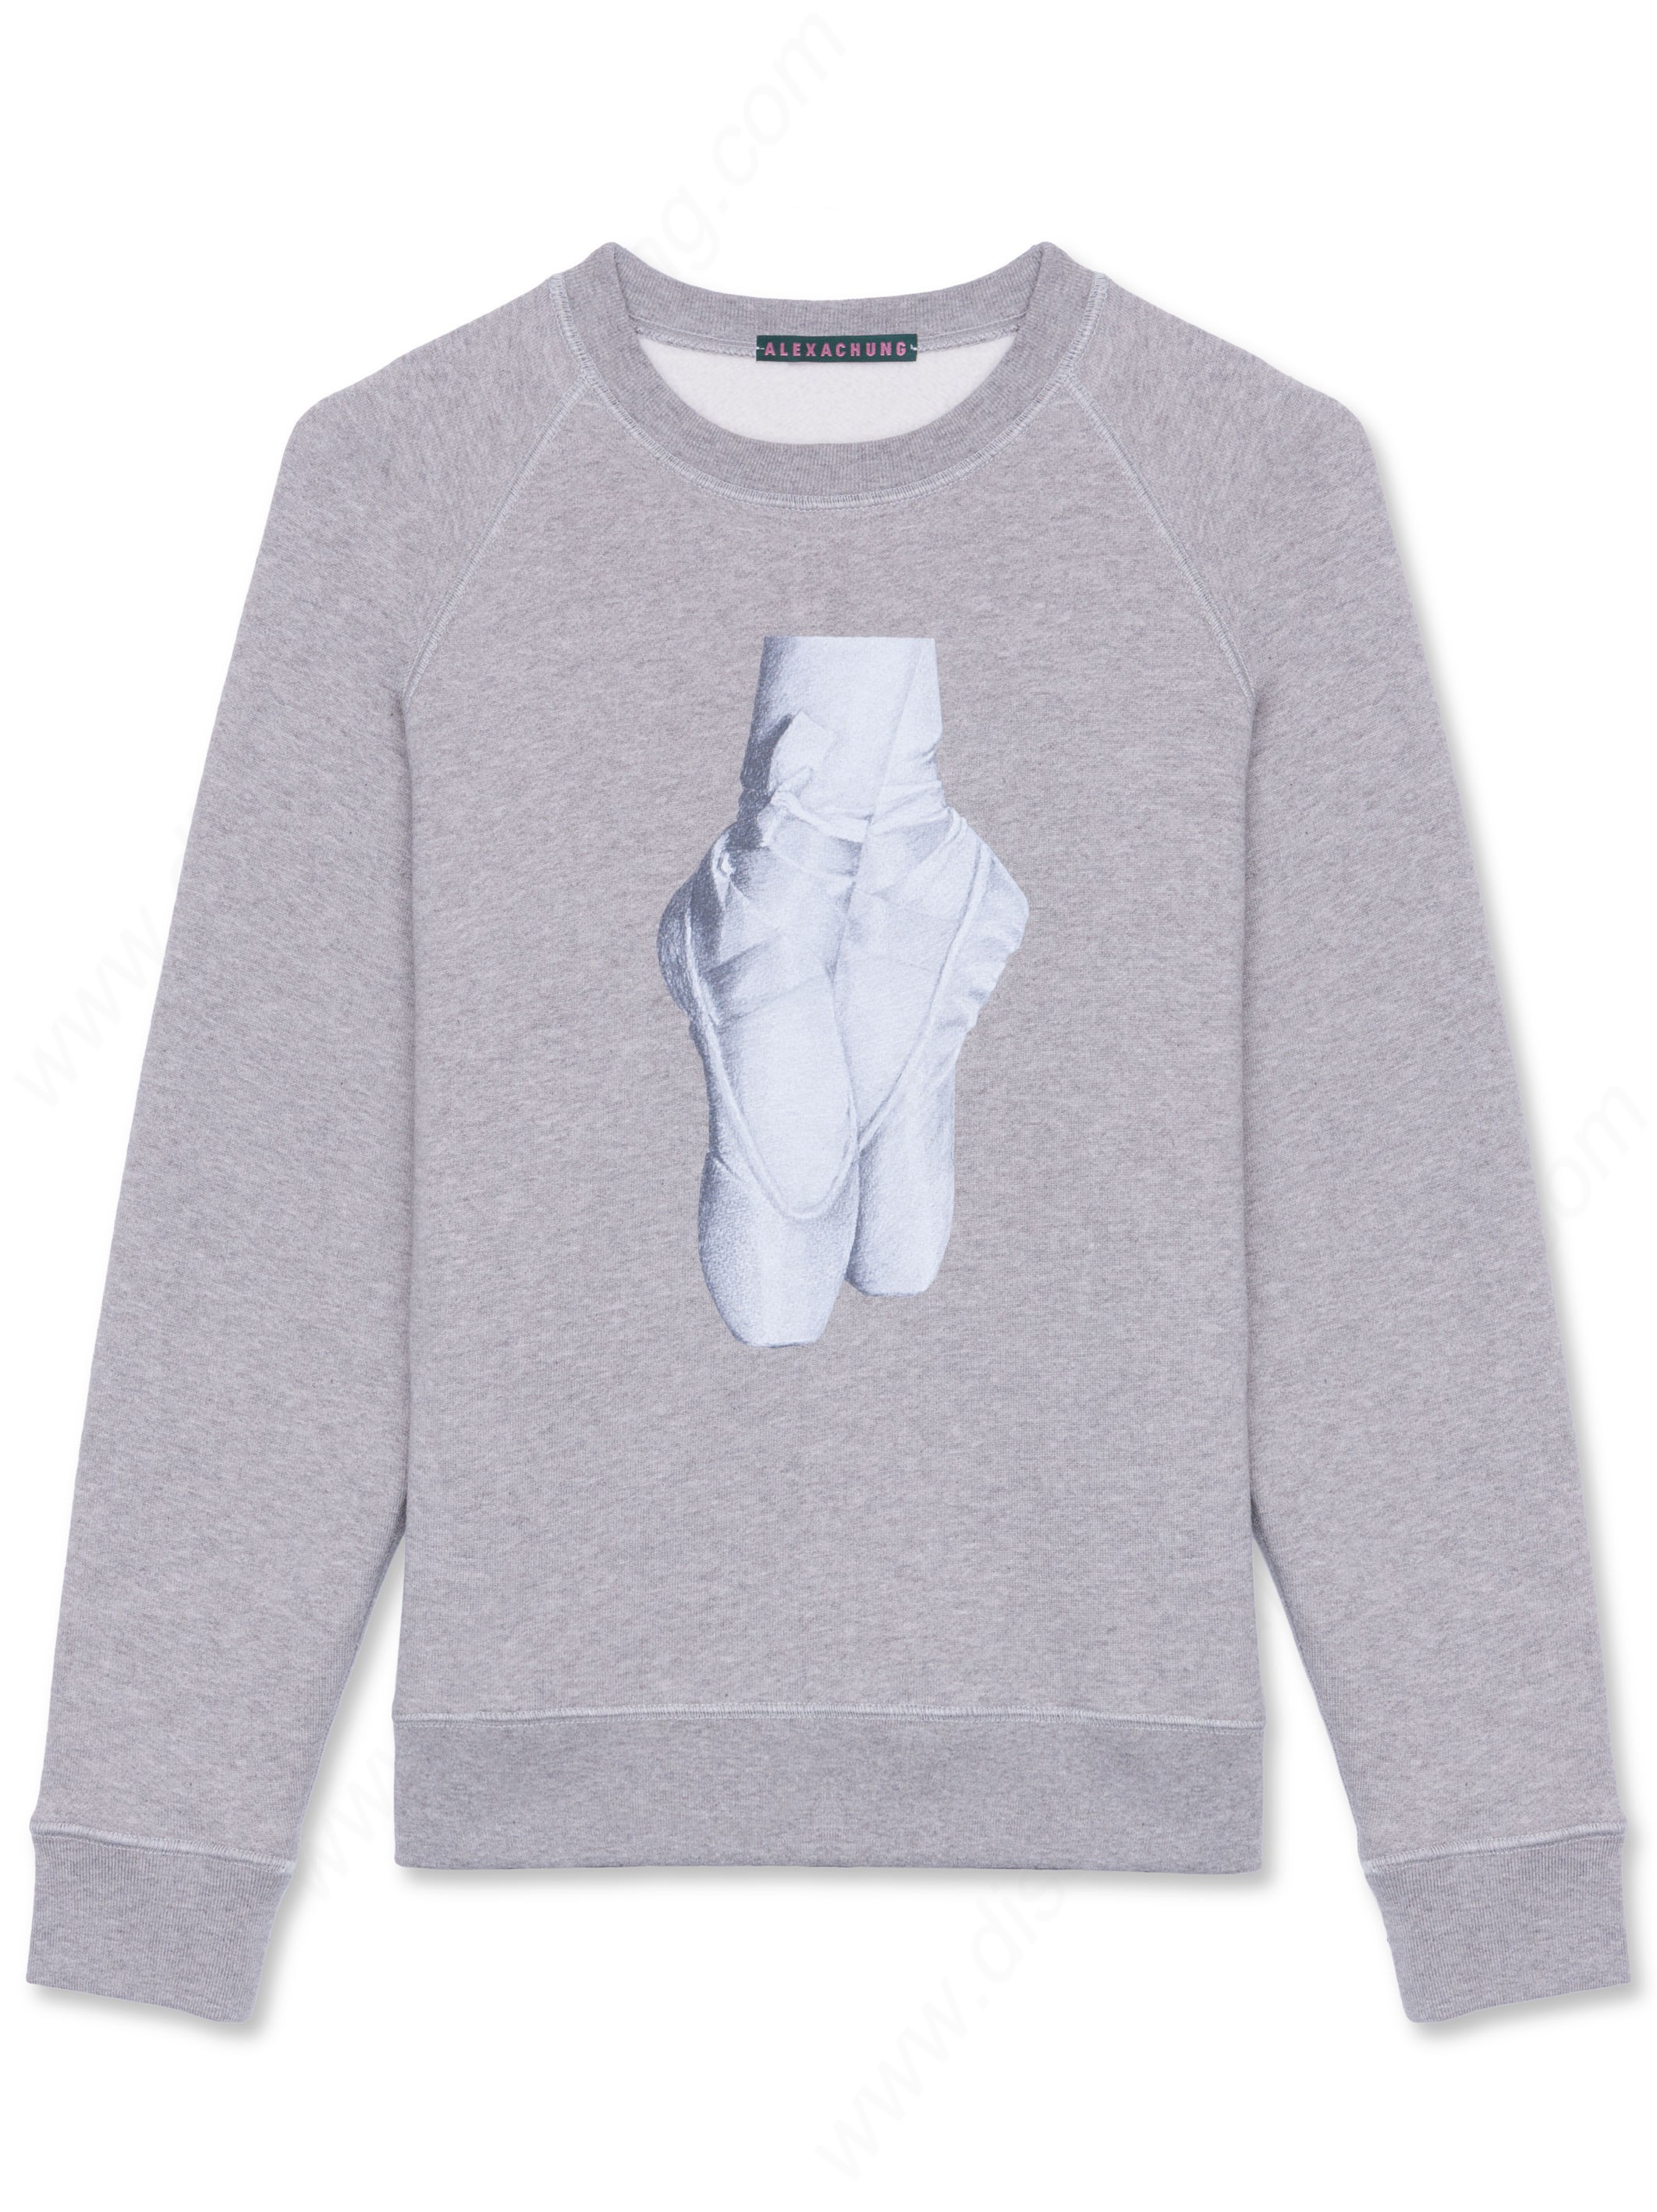 Alexachung Grey En Pointe Sweatshirt - Alexachung Grey En Pointe Sweatshirt